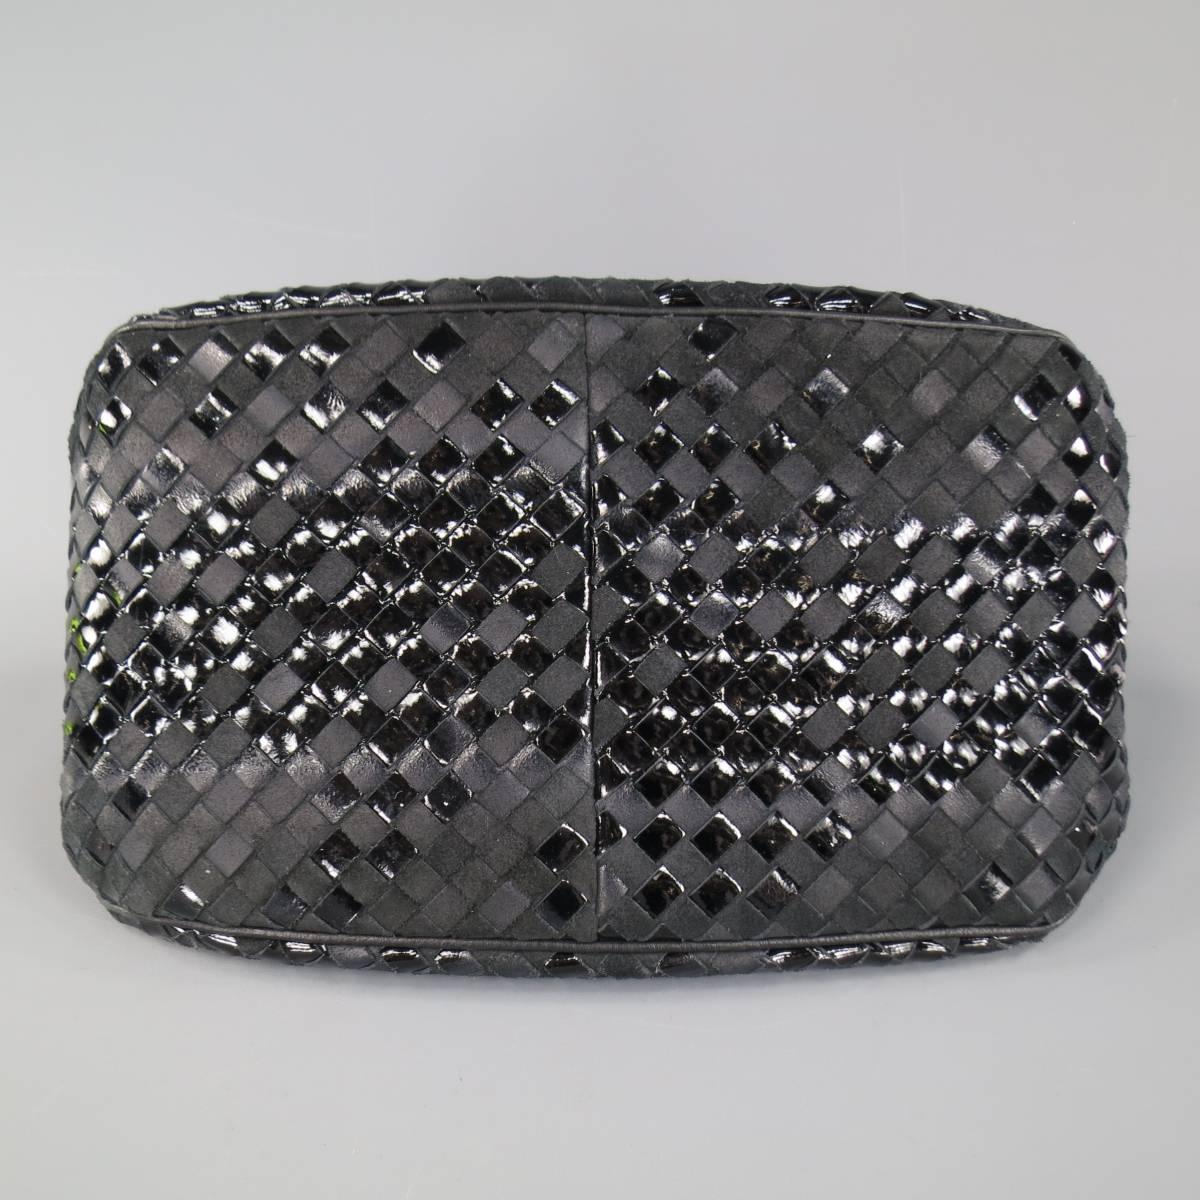 BOTTEGA VENETA Black Leather Suede & Patent Intrecciato Handbag 3